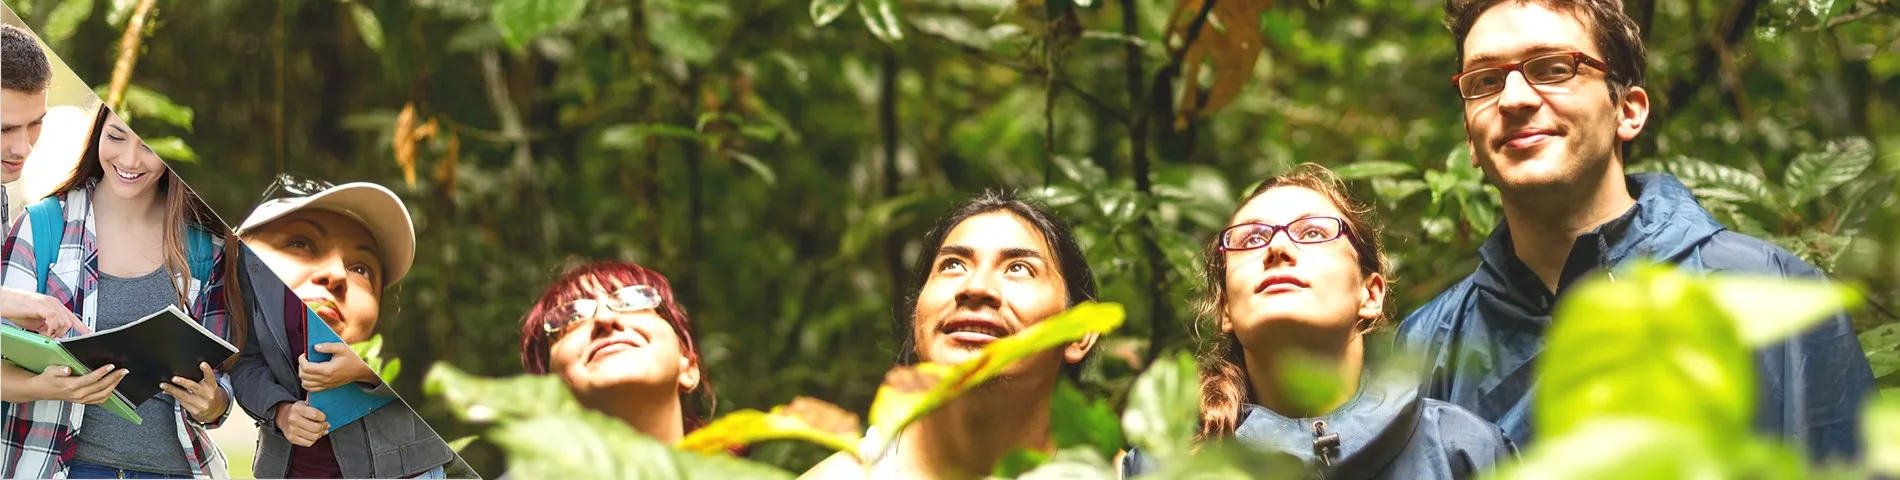 Jungle amazonienne - 